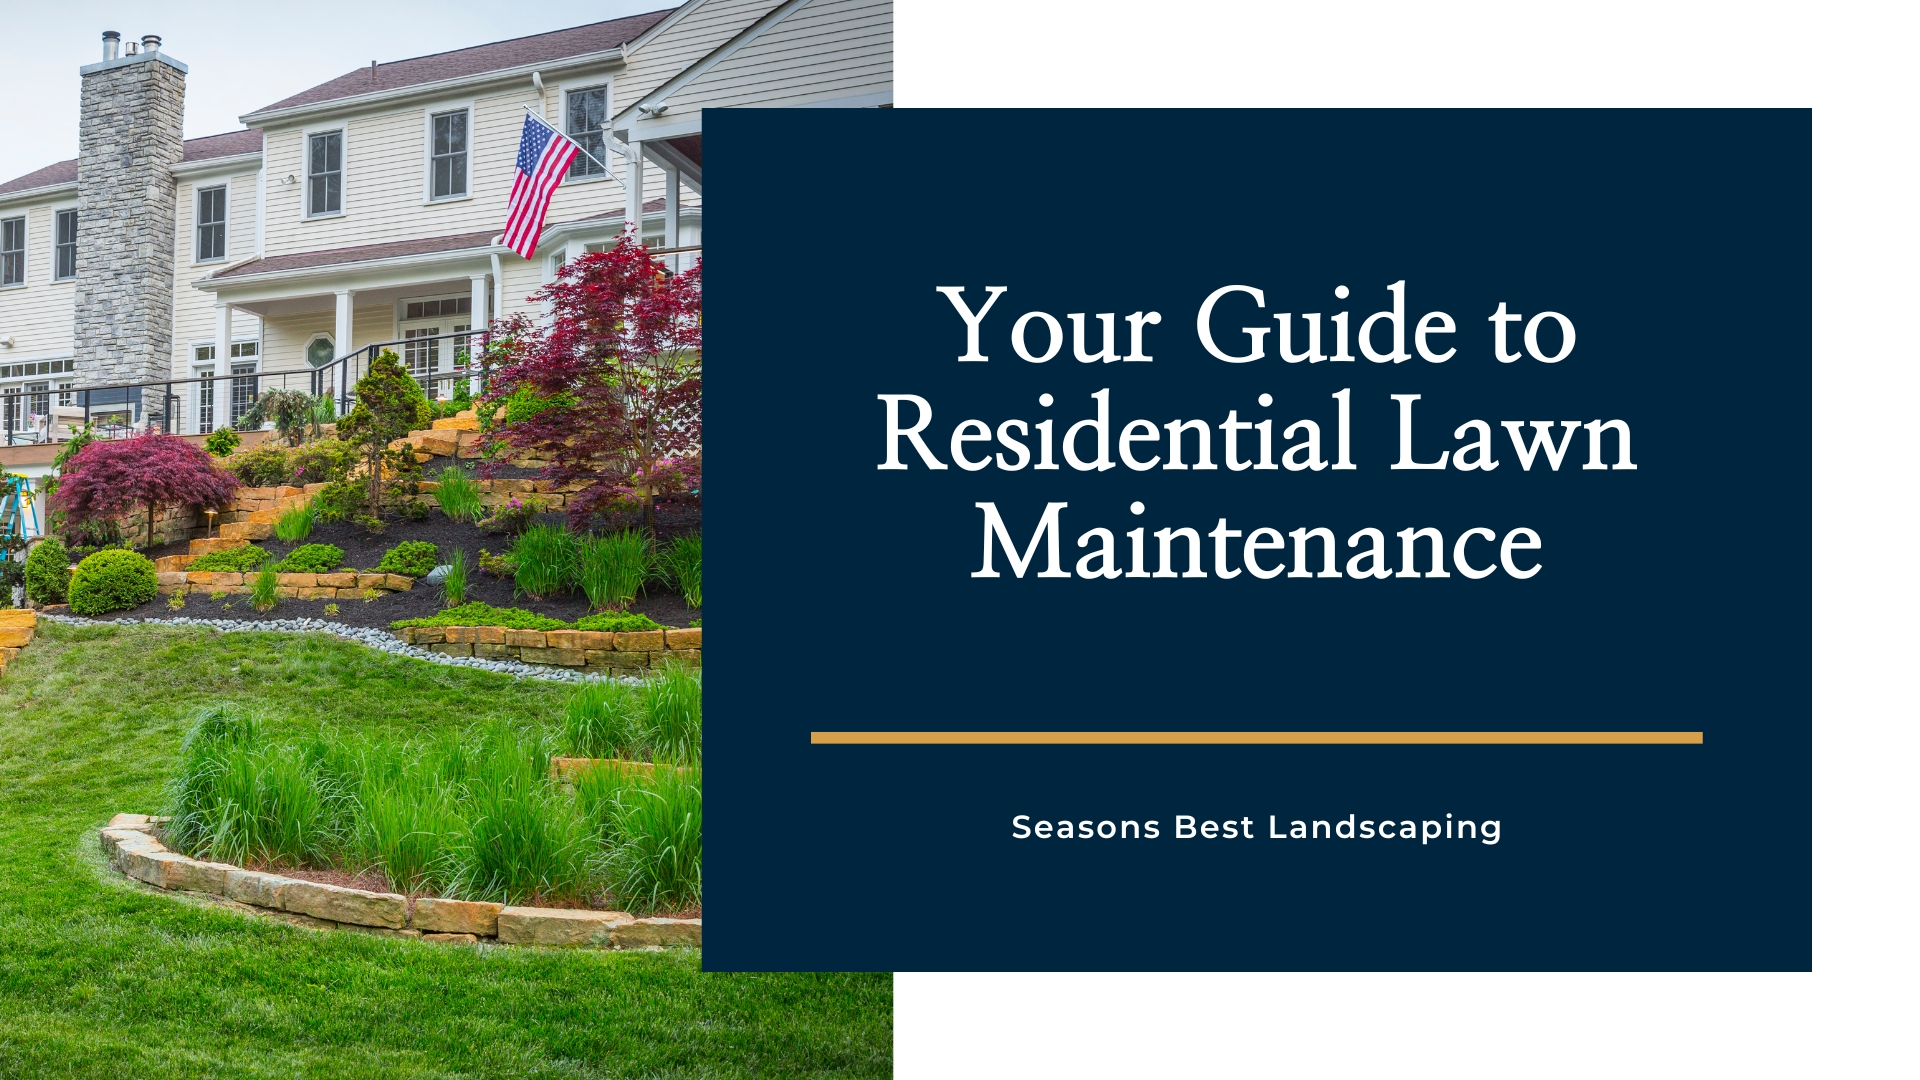 Residential Lawn Maintenance Blog Image - Seasons Best Landscaping